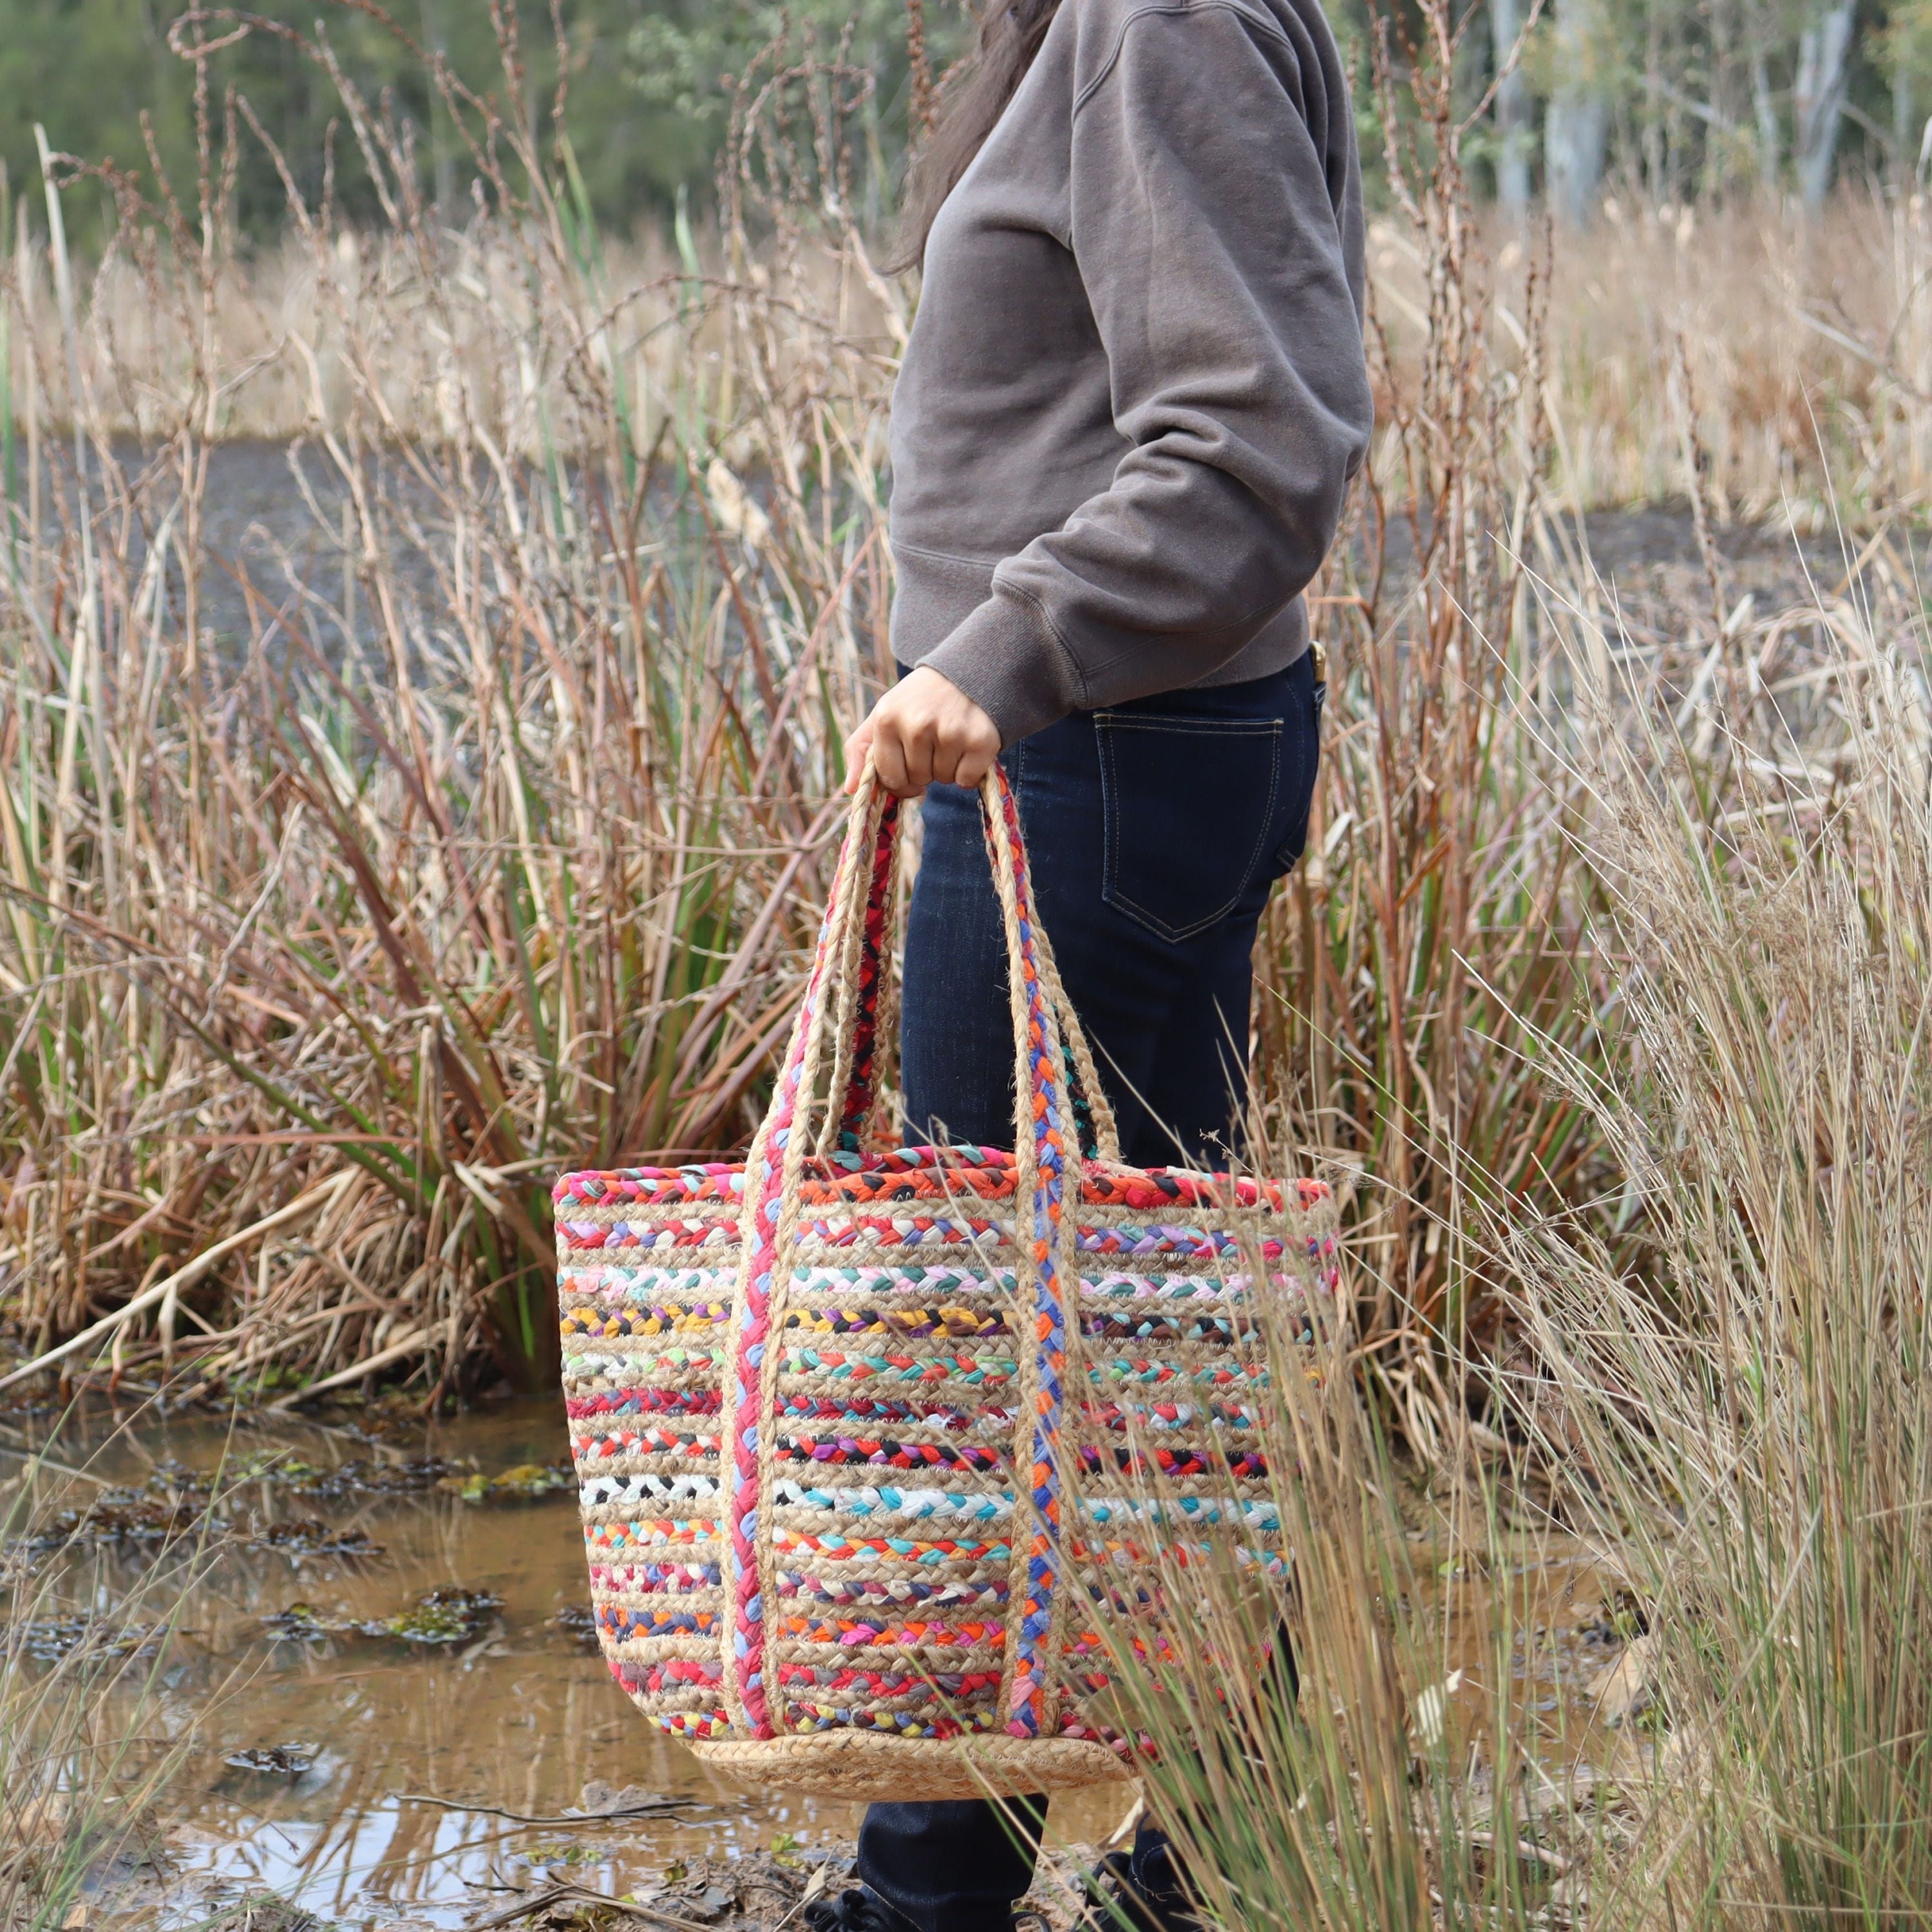 Foeses Women's Handmade Woven Straw Tote Bag